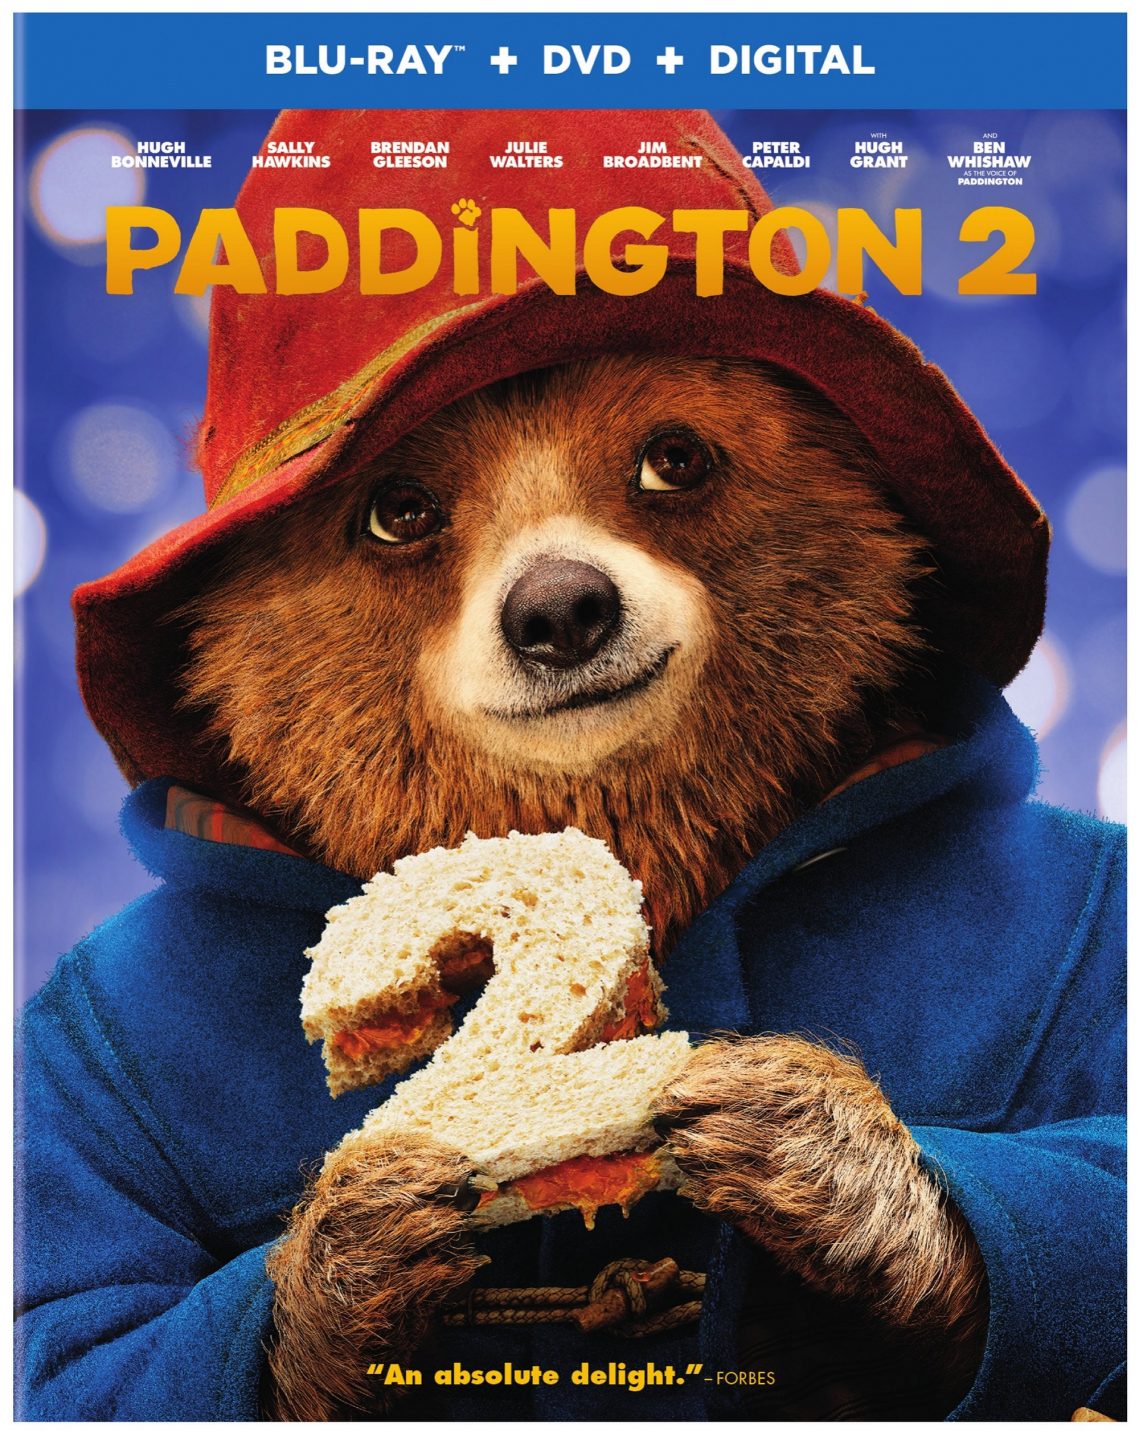 Paddington 2 Blu-Ray Combo Pack cover (Warner Bros. Home Entertainment)